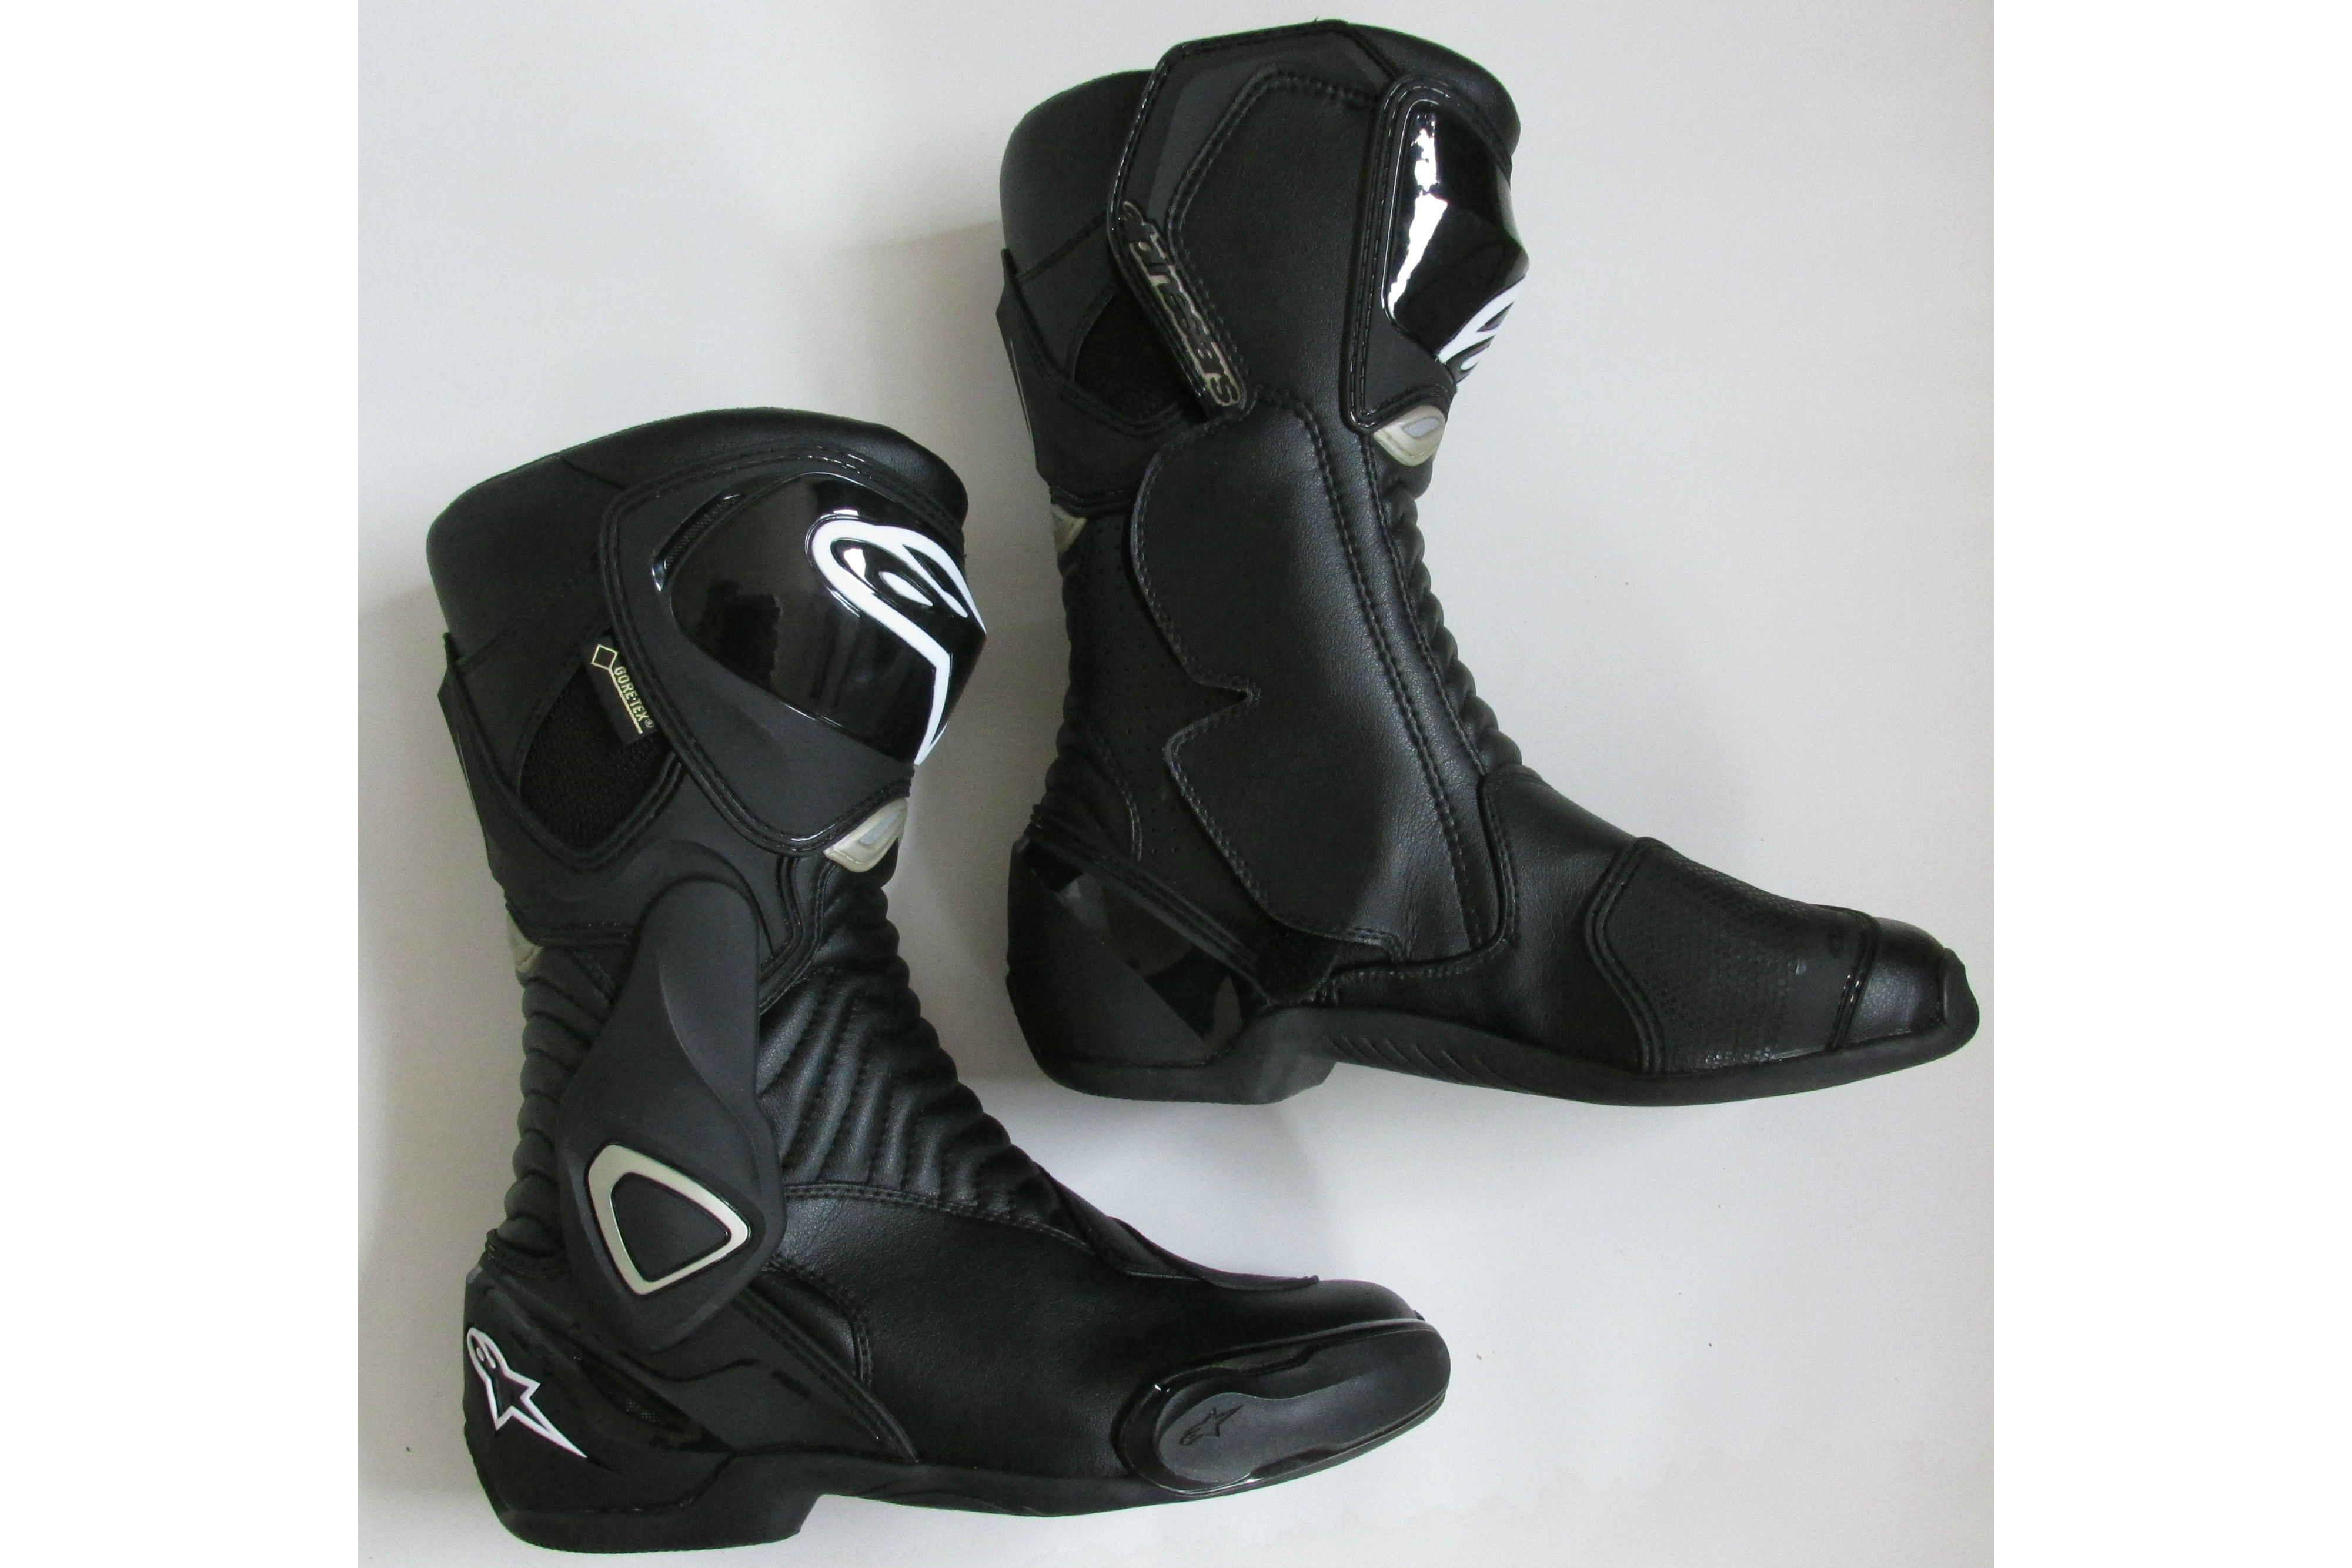 Review: Alpinestars S-MX 6 Gore-Tex boots